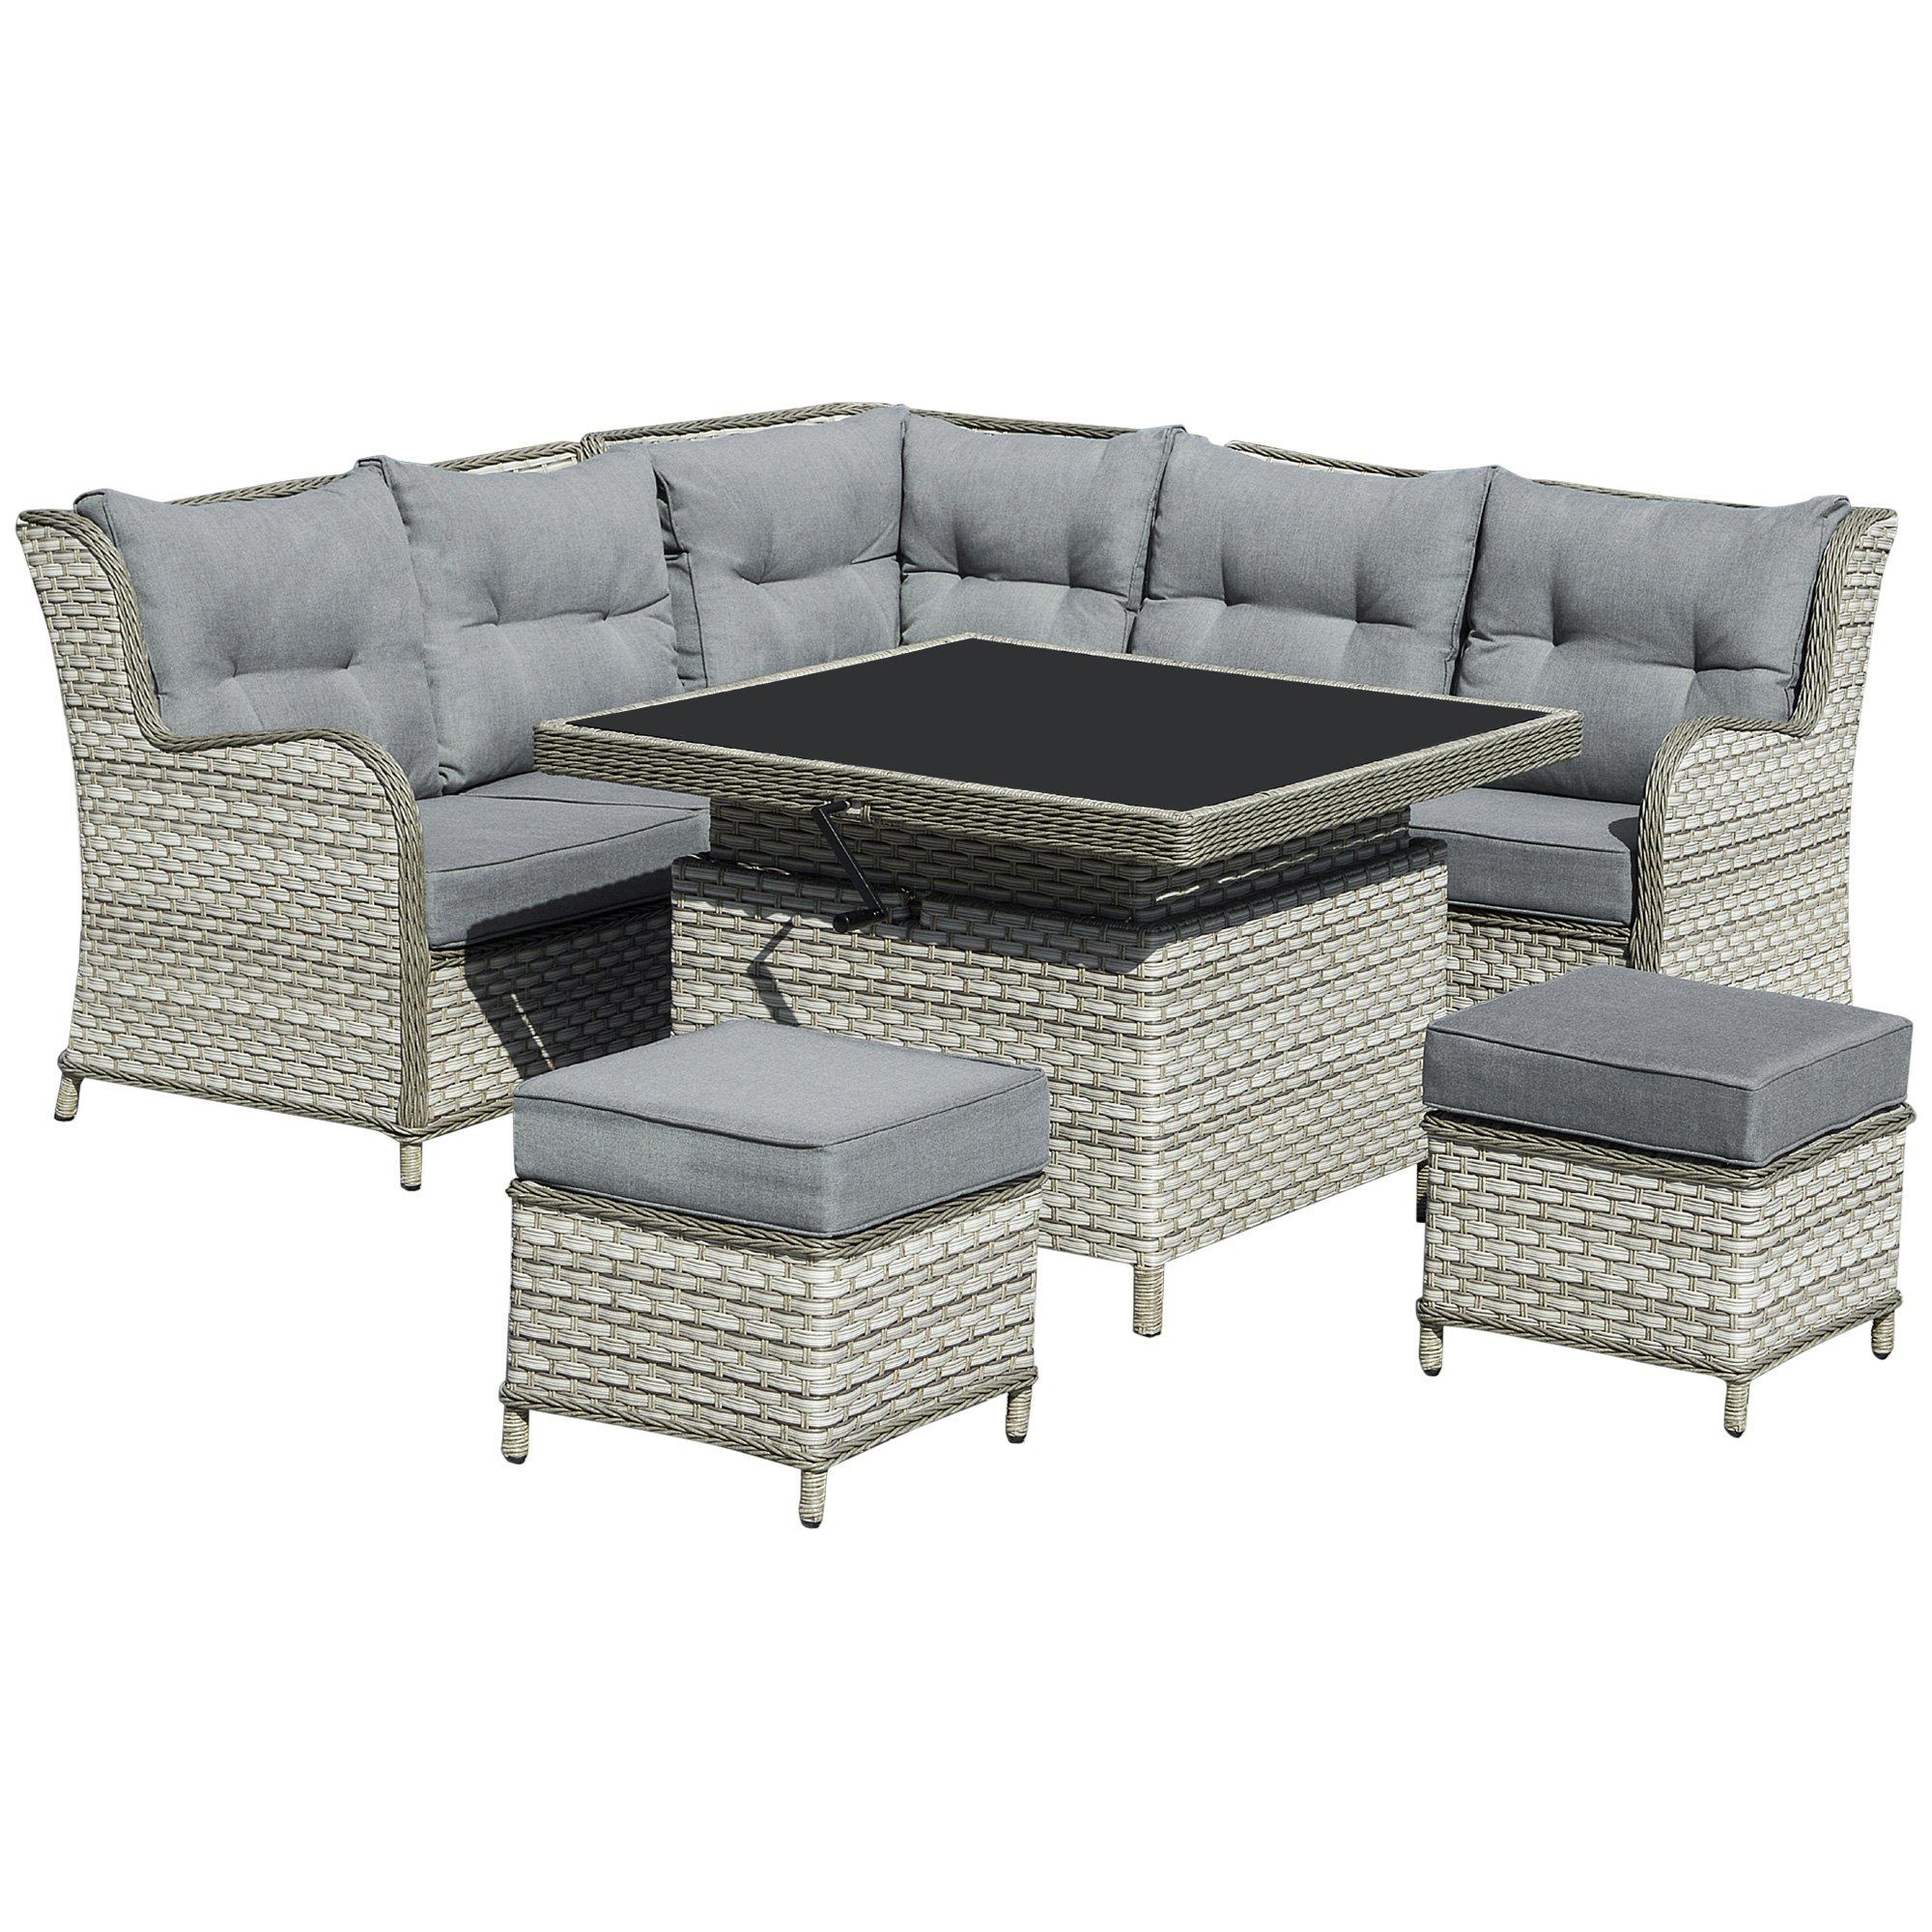 6 PCs Patio PE Rattan Wicker Sofa Set Sectional Conversation Furniture Set